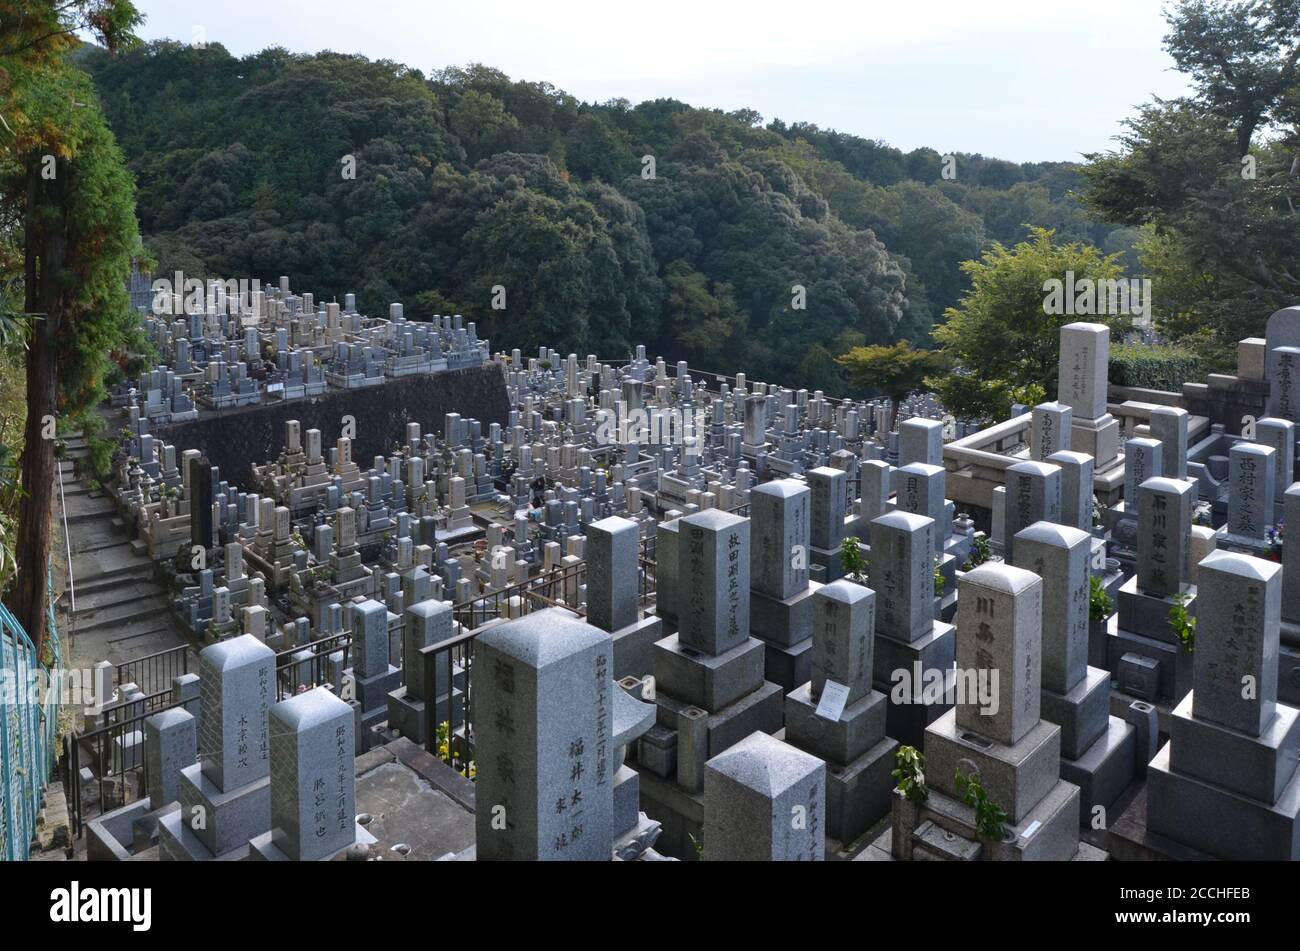 Historic Graves at the Nishi Otani cemetery in the Higashiyama District, Kyoto, Japan. Stock Photo